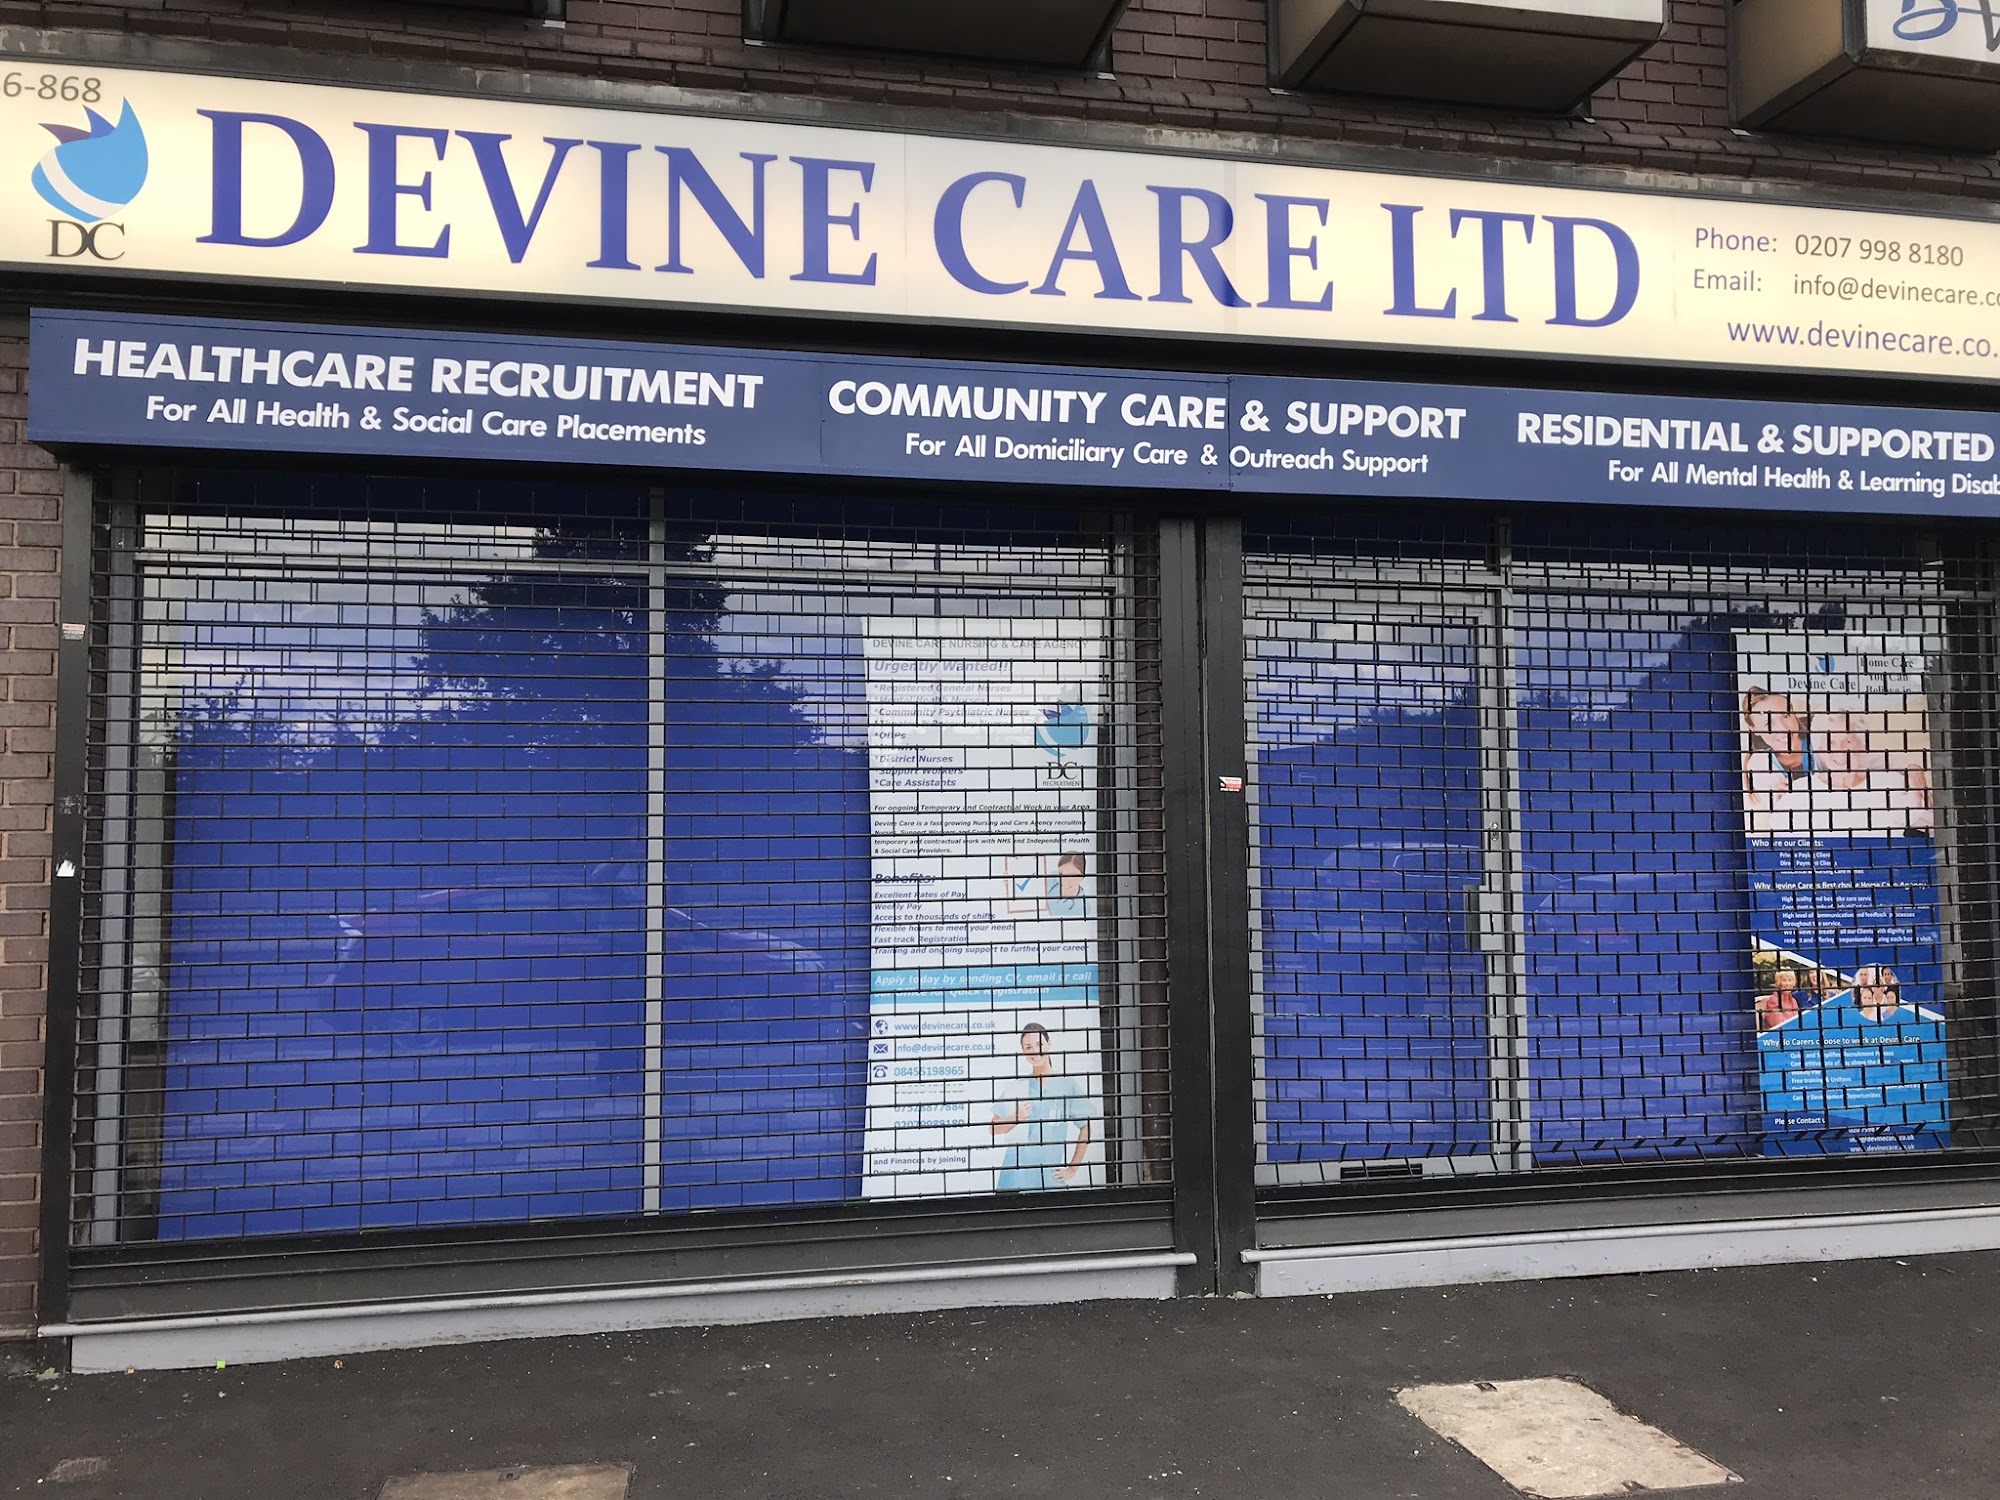 Devine Care Ltd